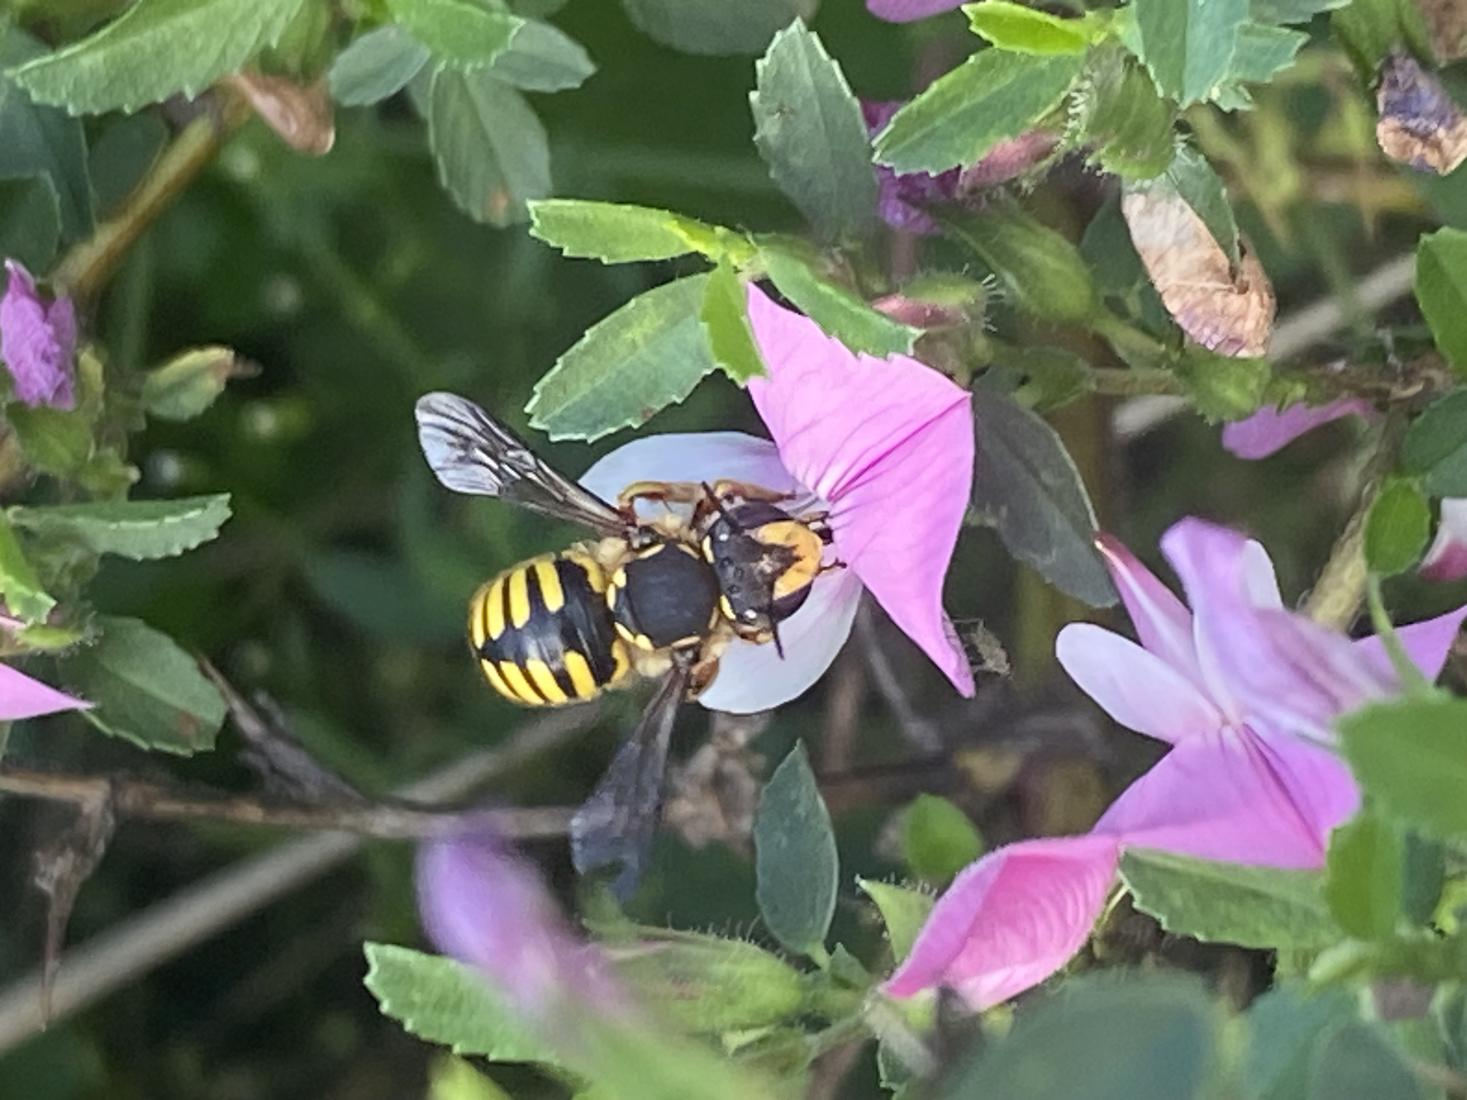 Wespe oder Biene?